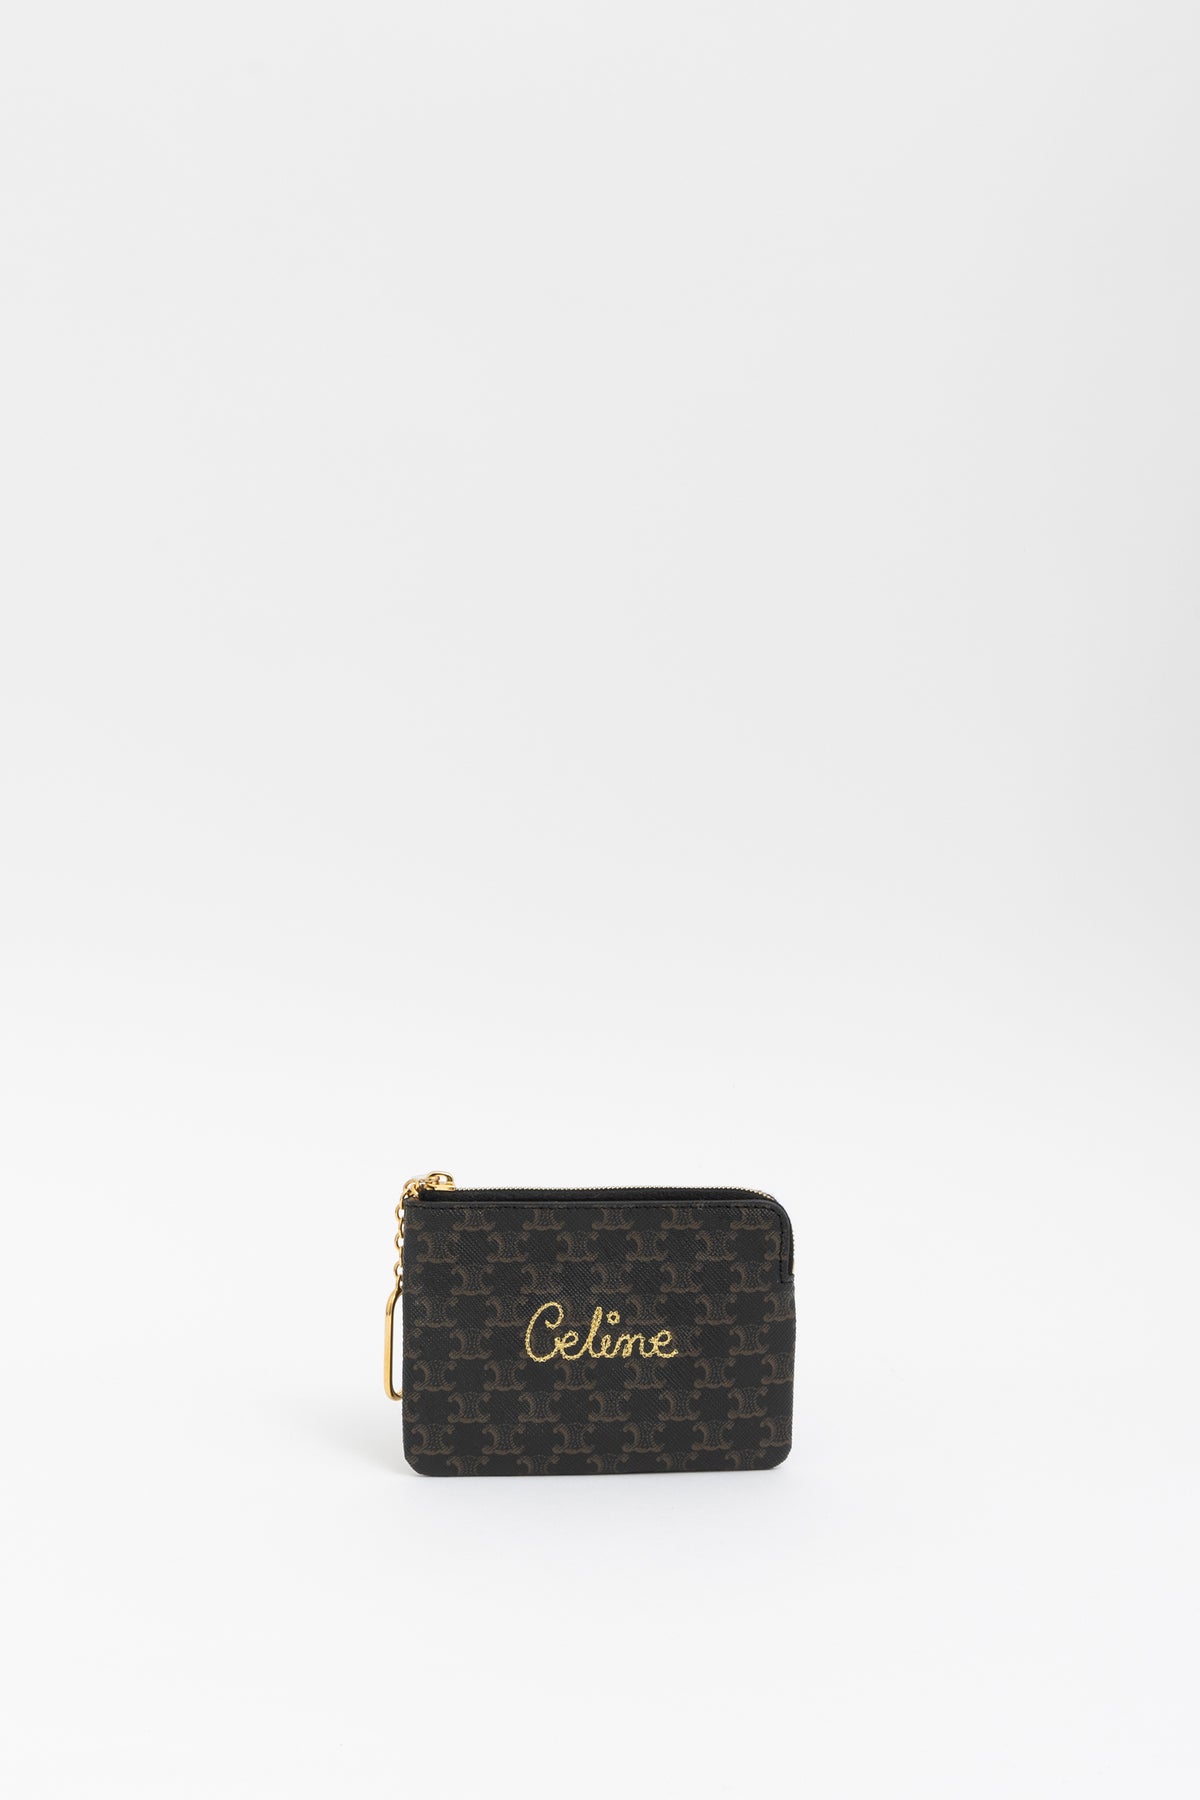 celine-logo-triomphe-coin-card-pouch-cbe2